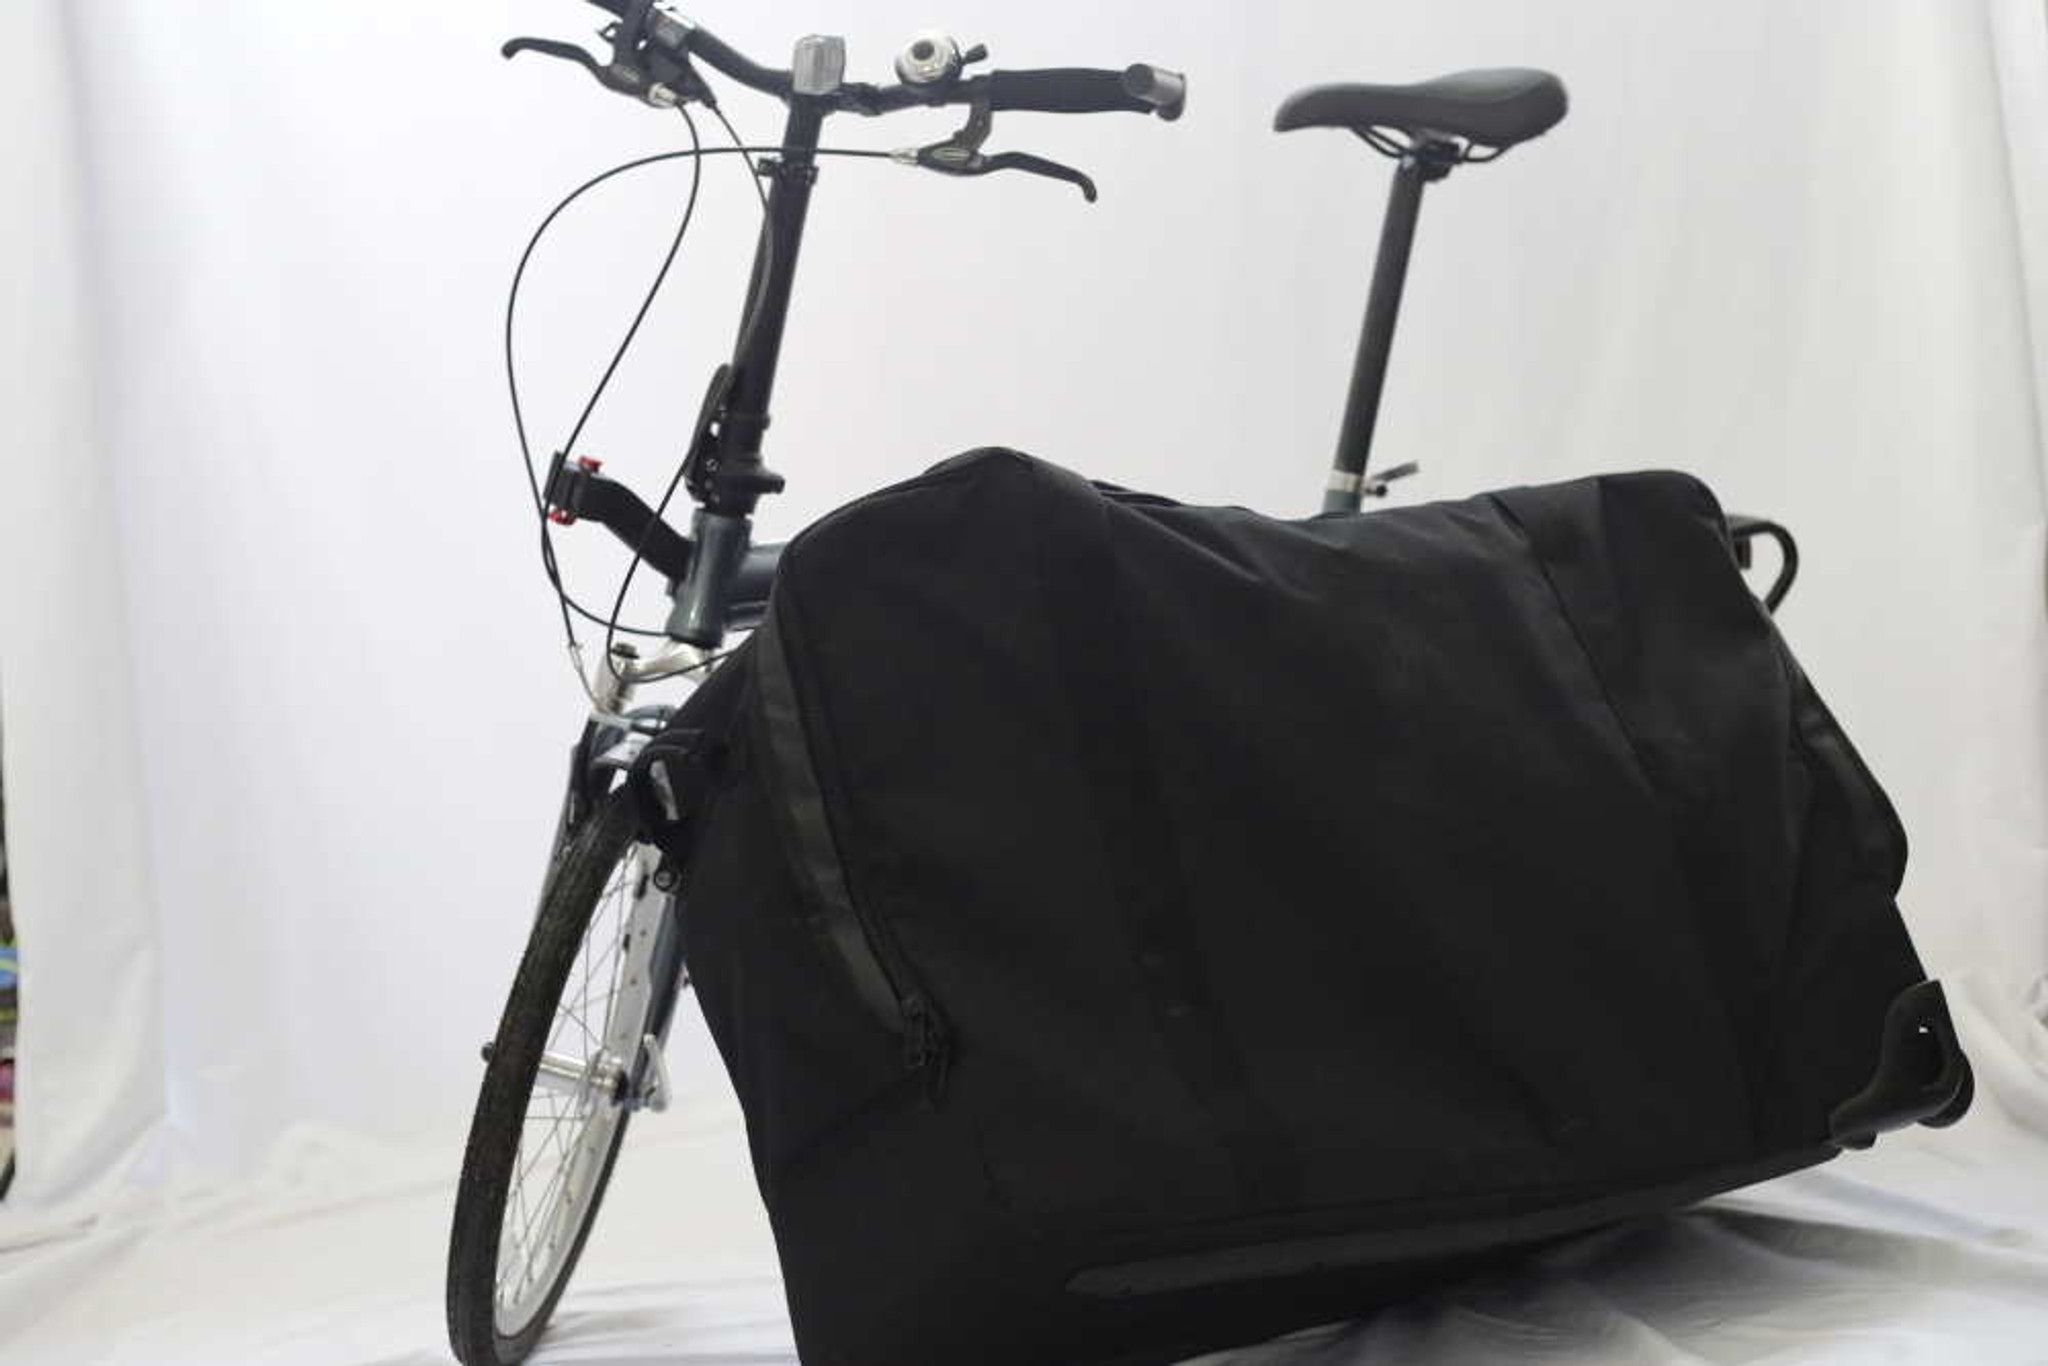 suitcase bike